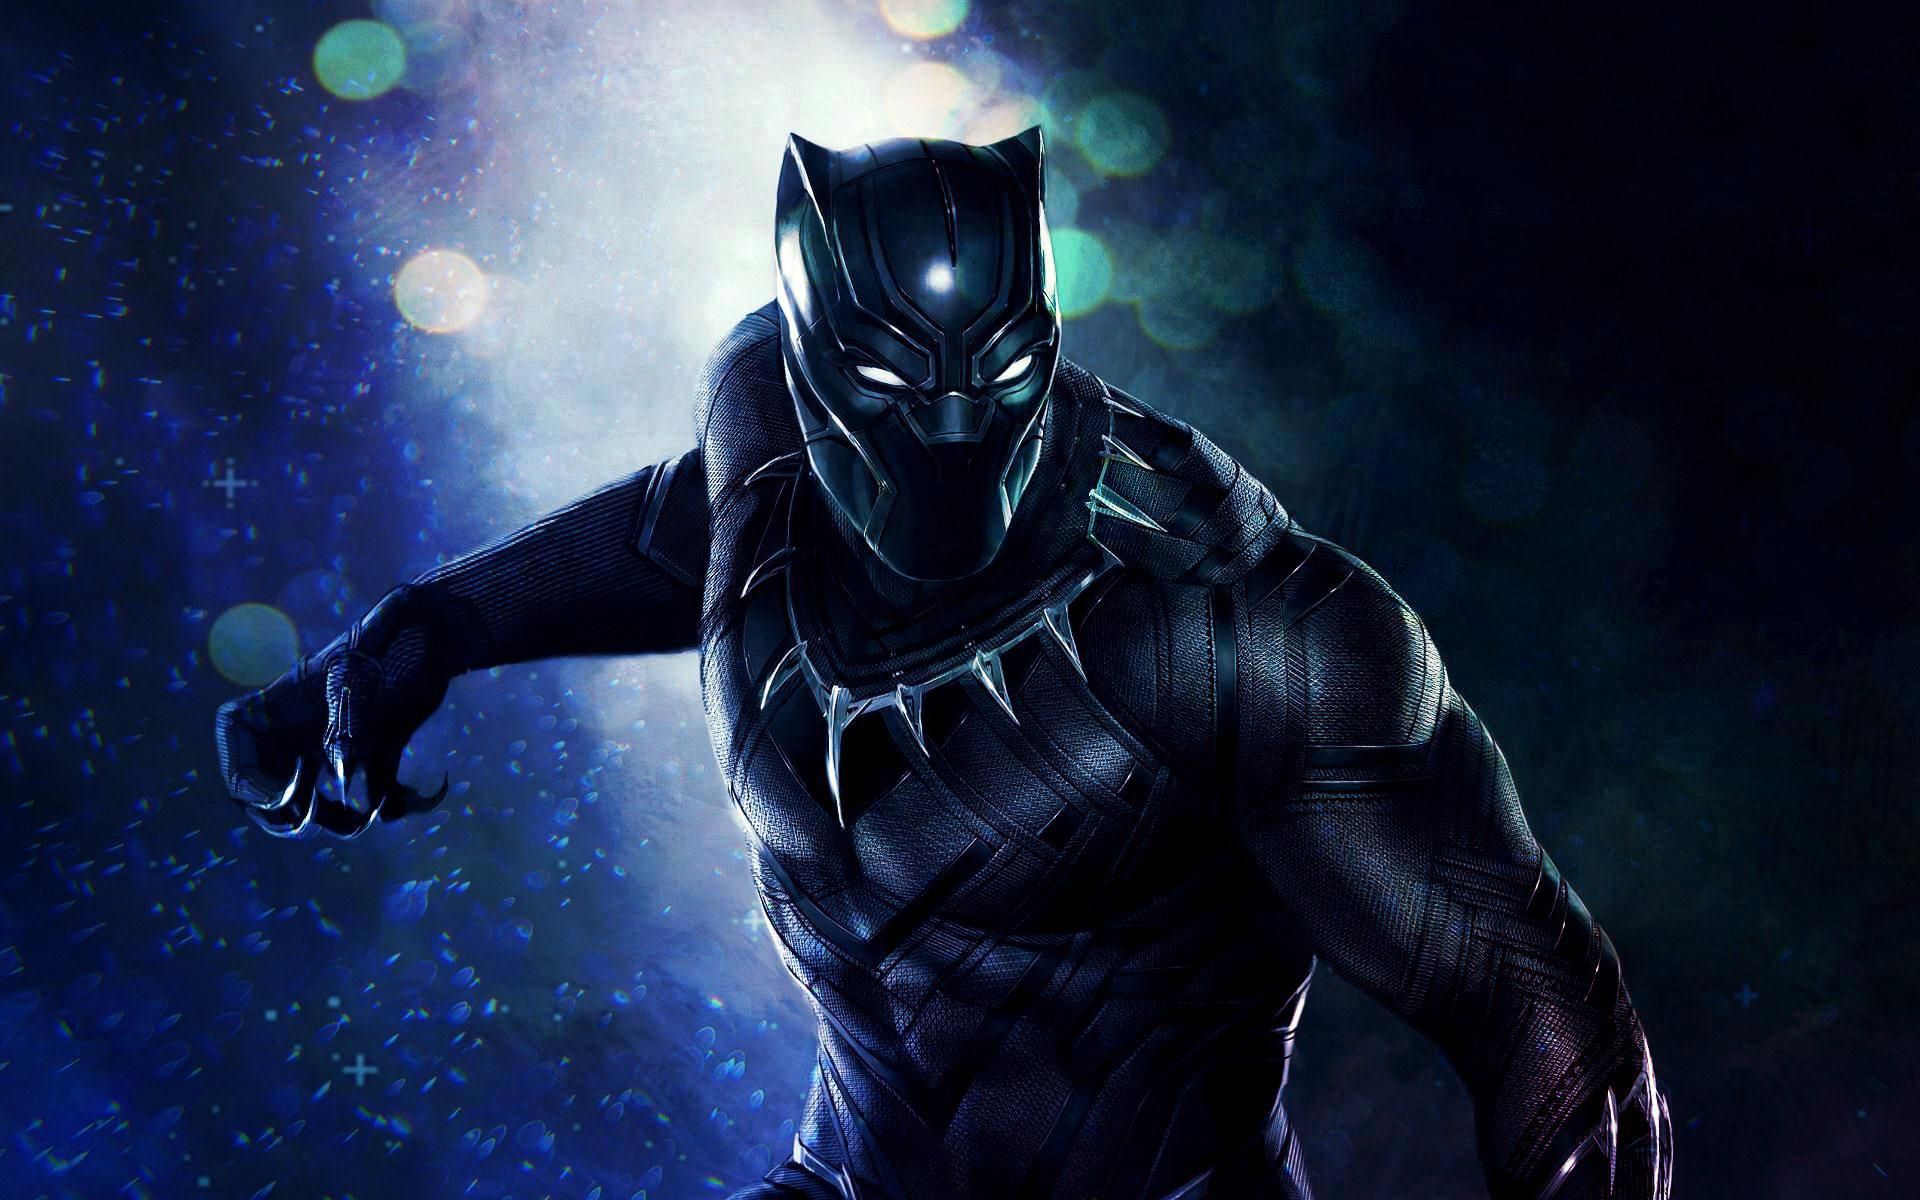 Black Panther costume